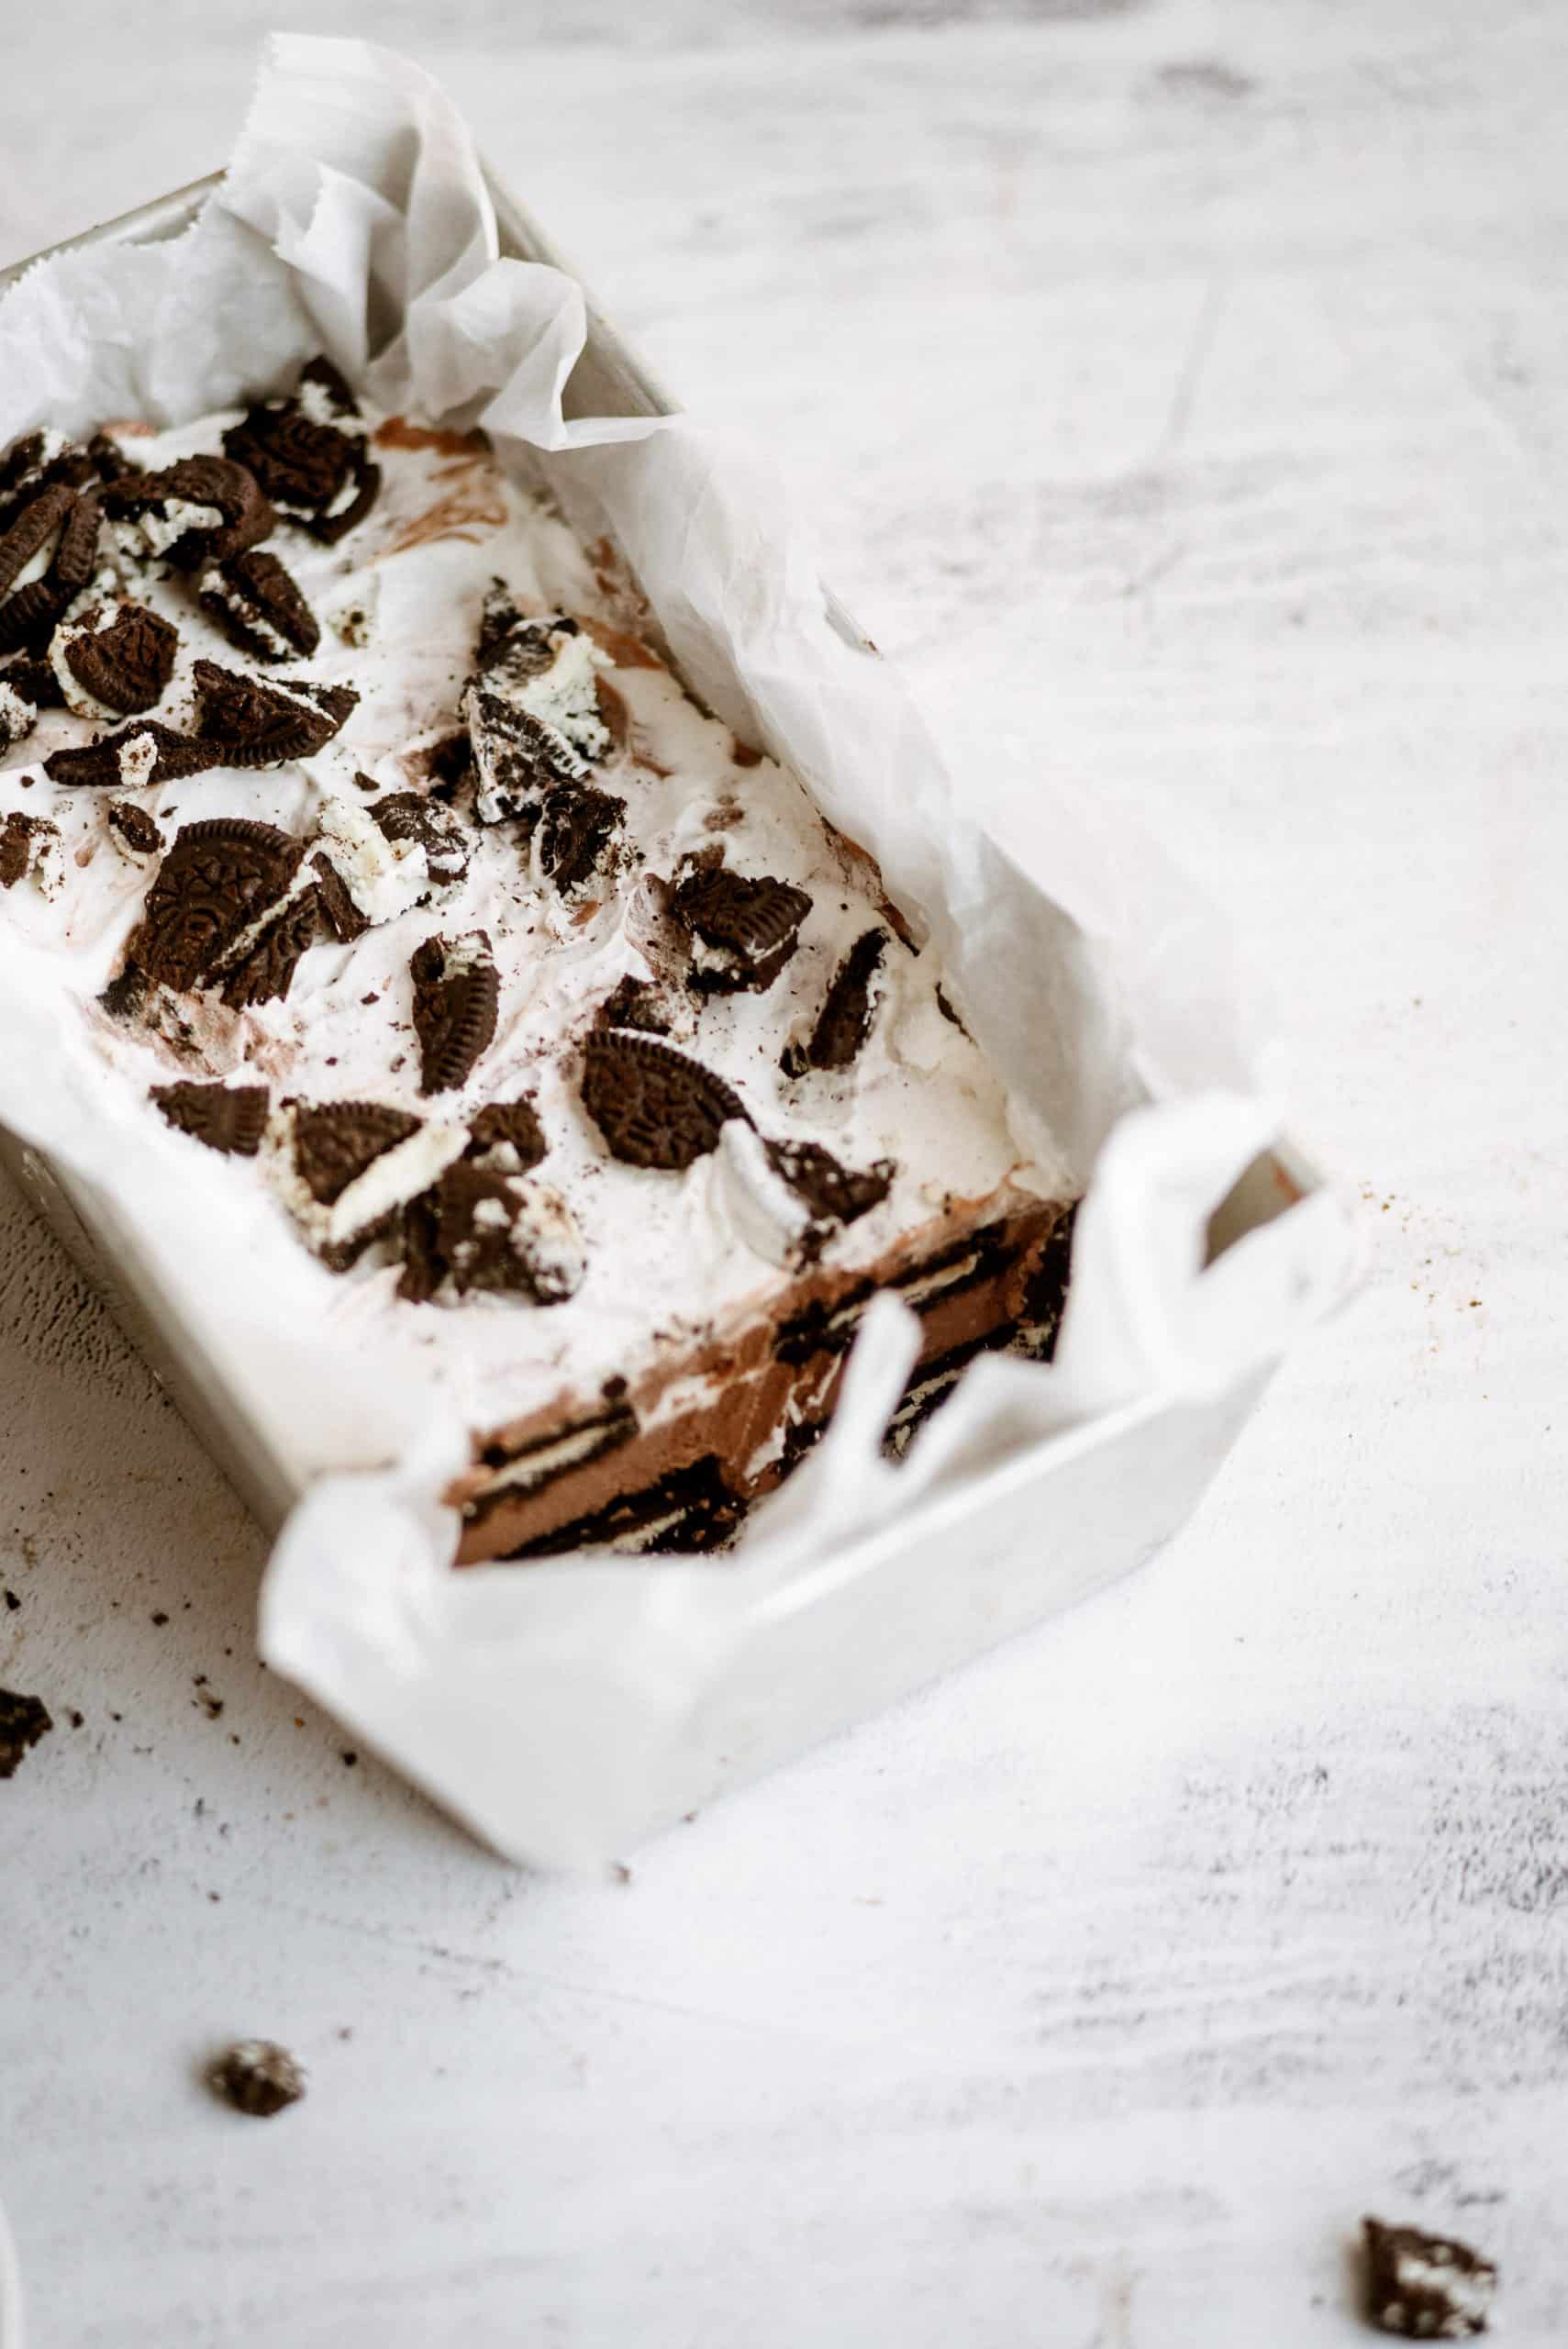 Summer-Time Impressing desserts! no bake eclair recipe ice box